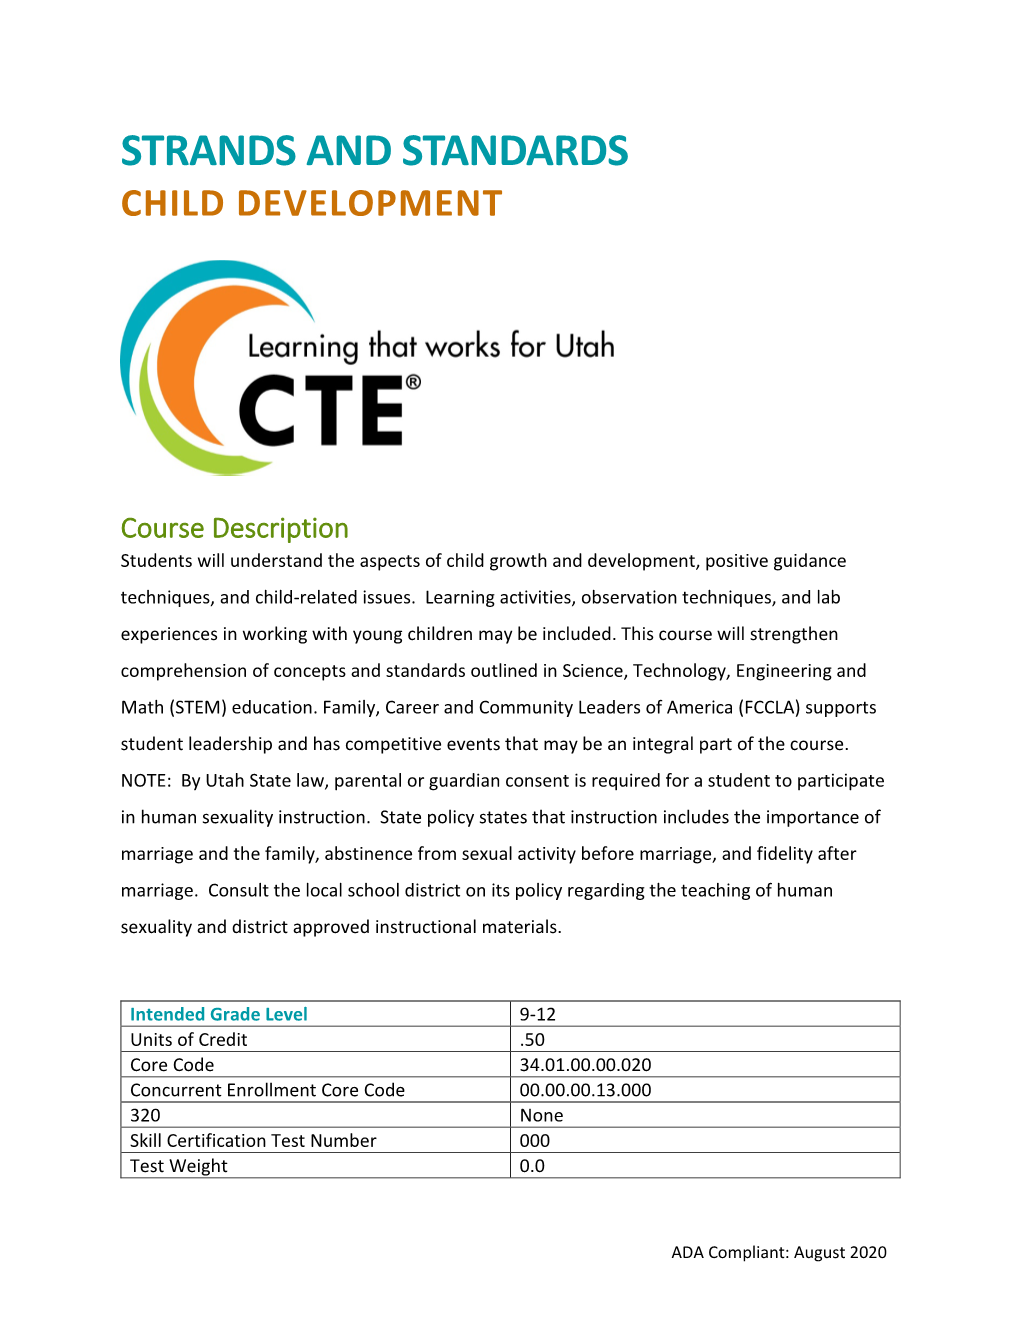 Child Development Strands and Standards